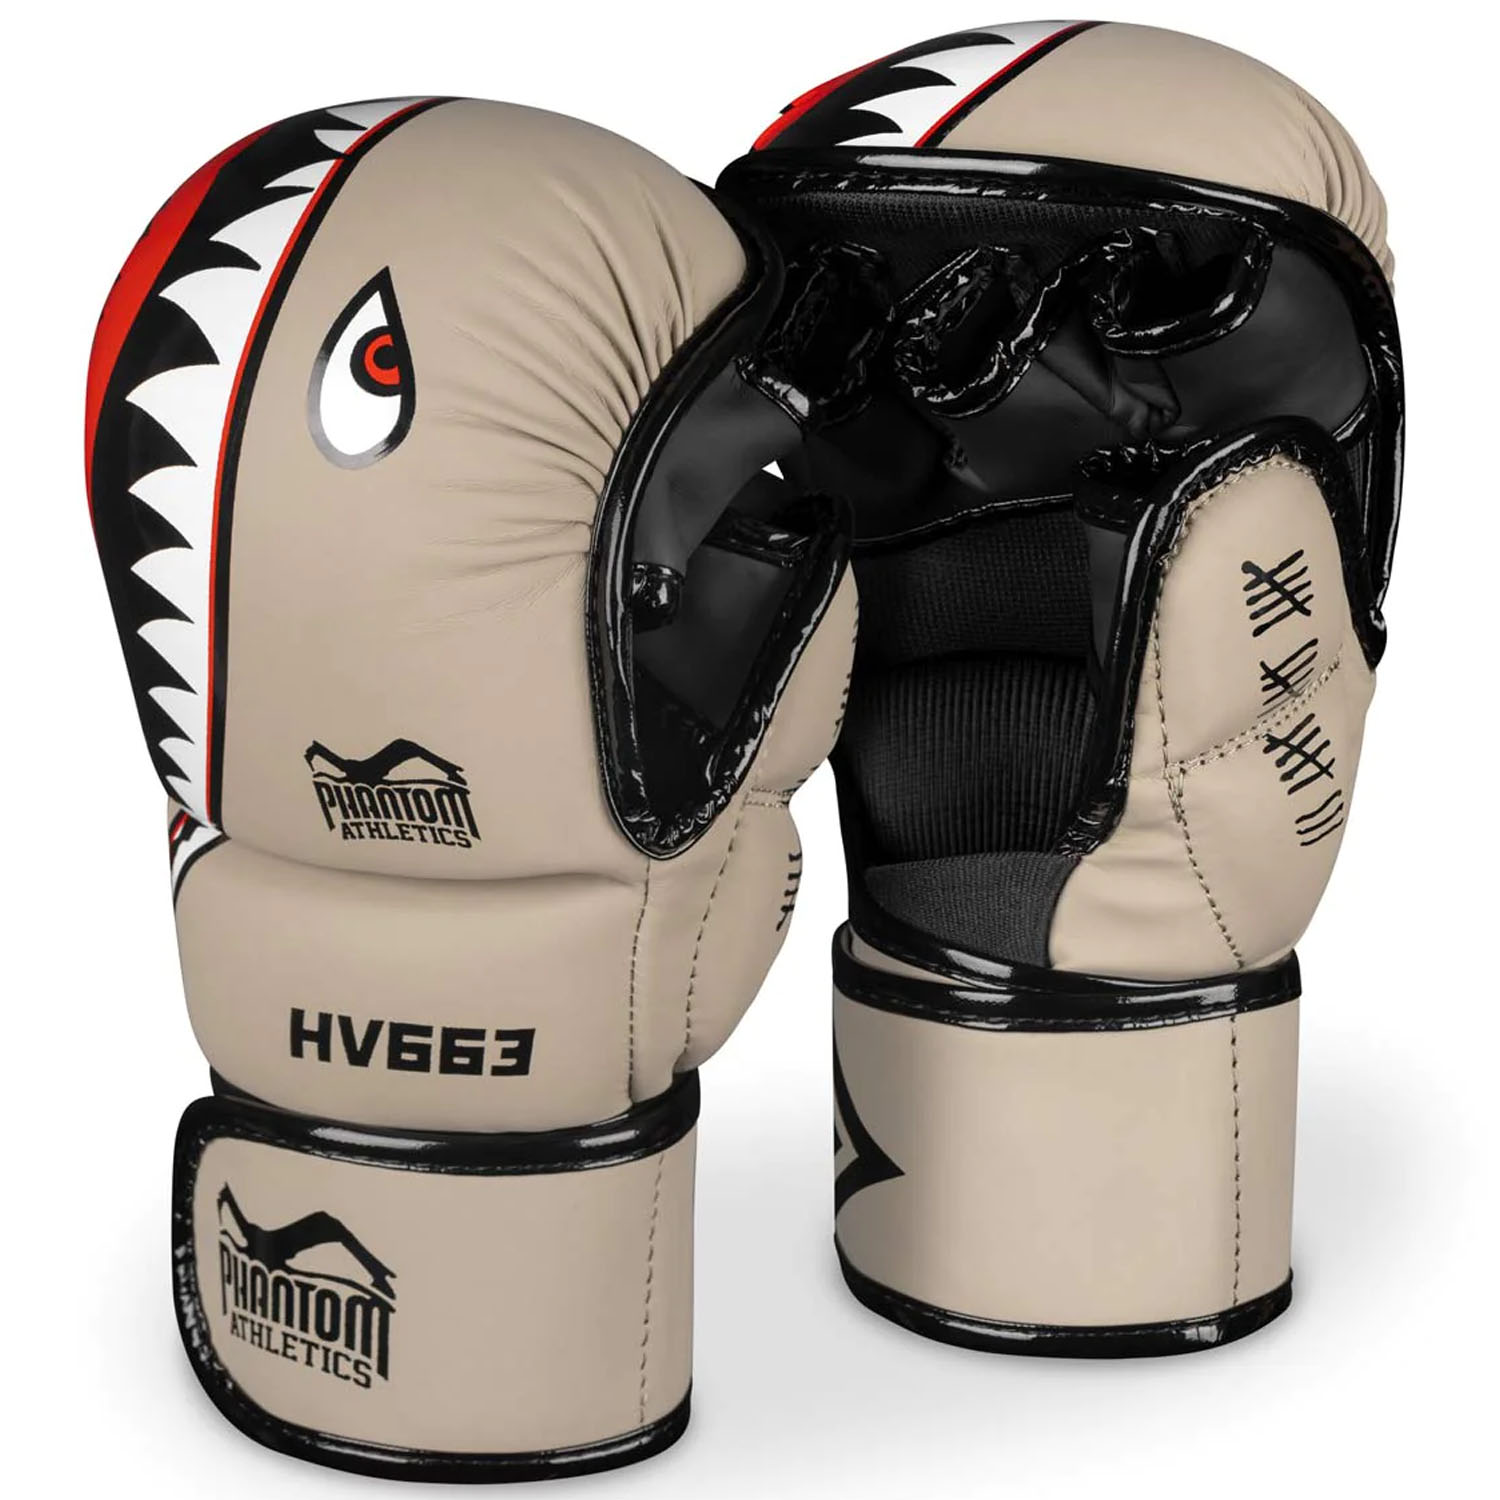 Phantom Athletics MMA Boxing Gloves, Fight Squad, Sparring, sand, L/XL